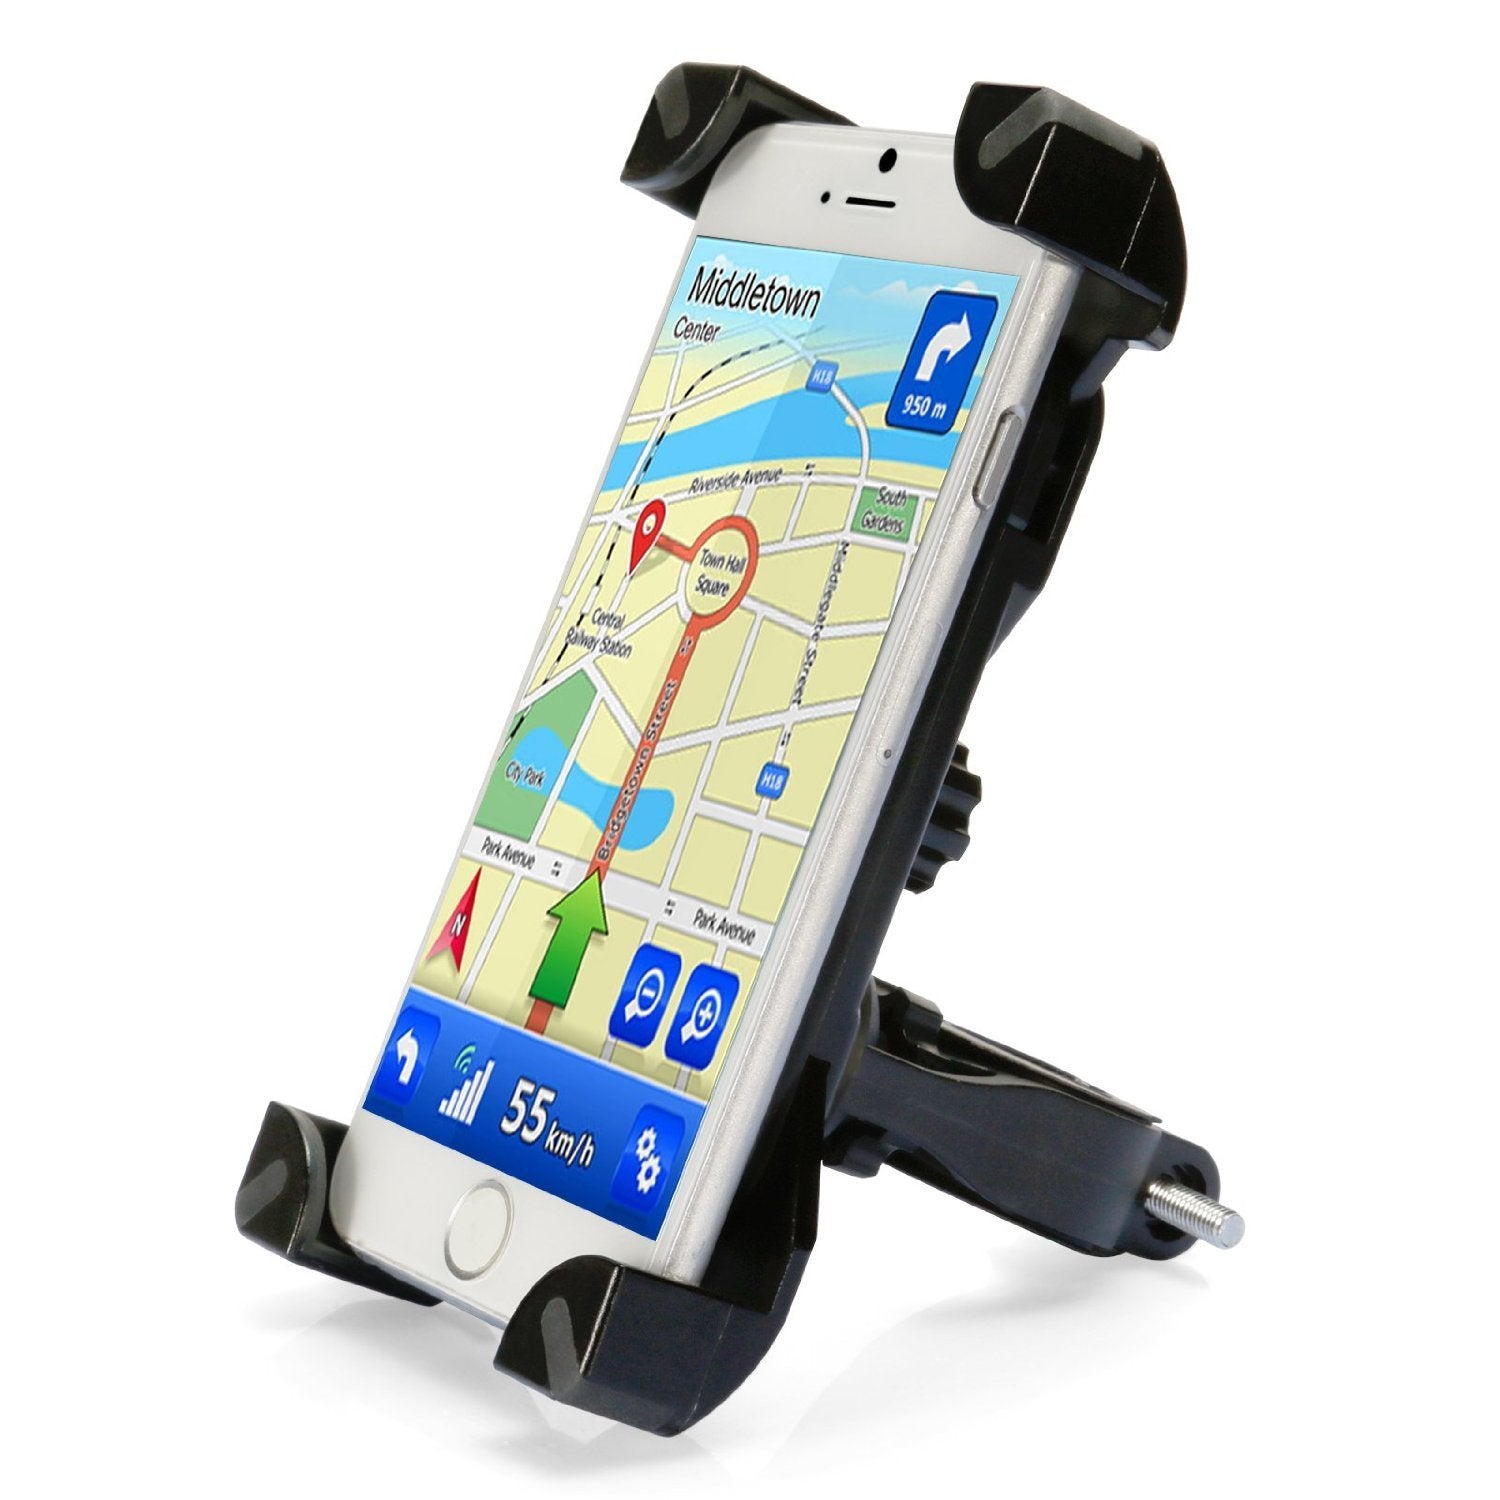 Universal CH-01 Bike Mount Bicycle Phone Holder Handlebar Phone Bracket for 4 Inch to 6 Inch Smartphones - BLACK